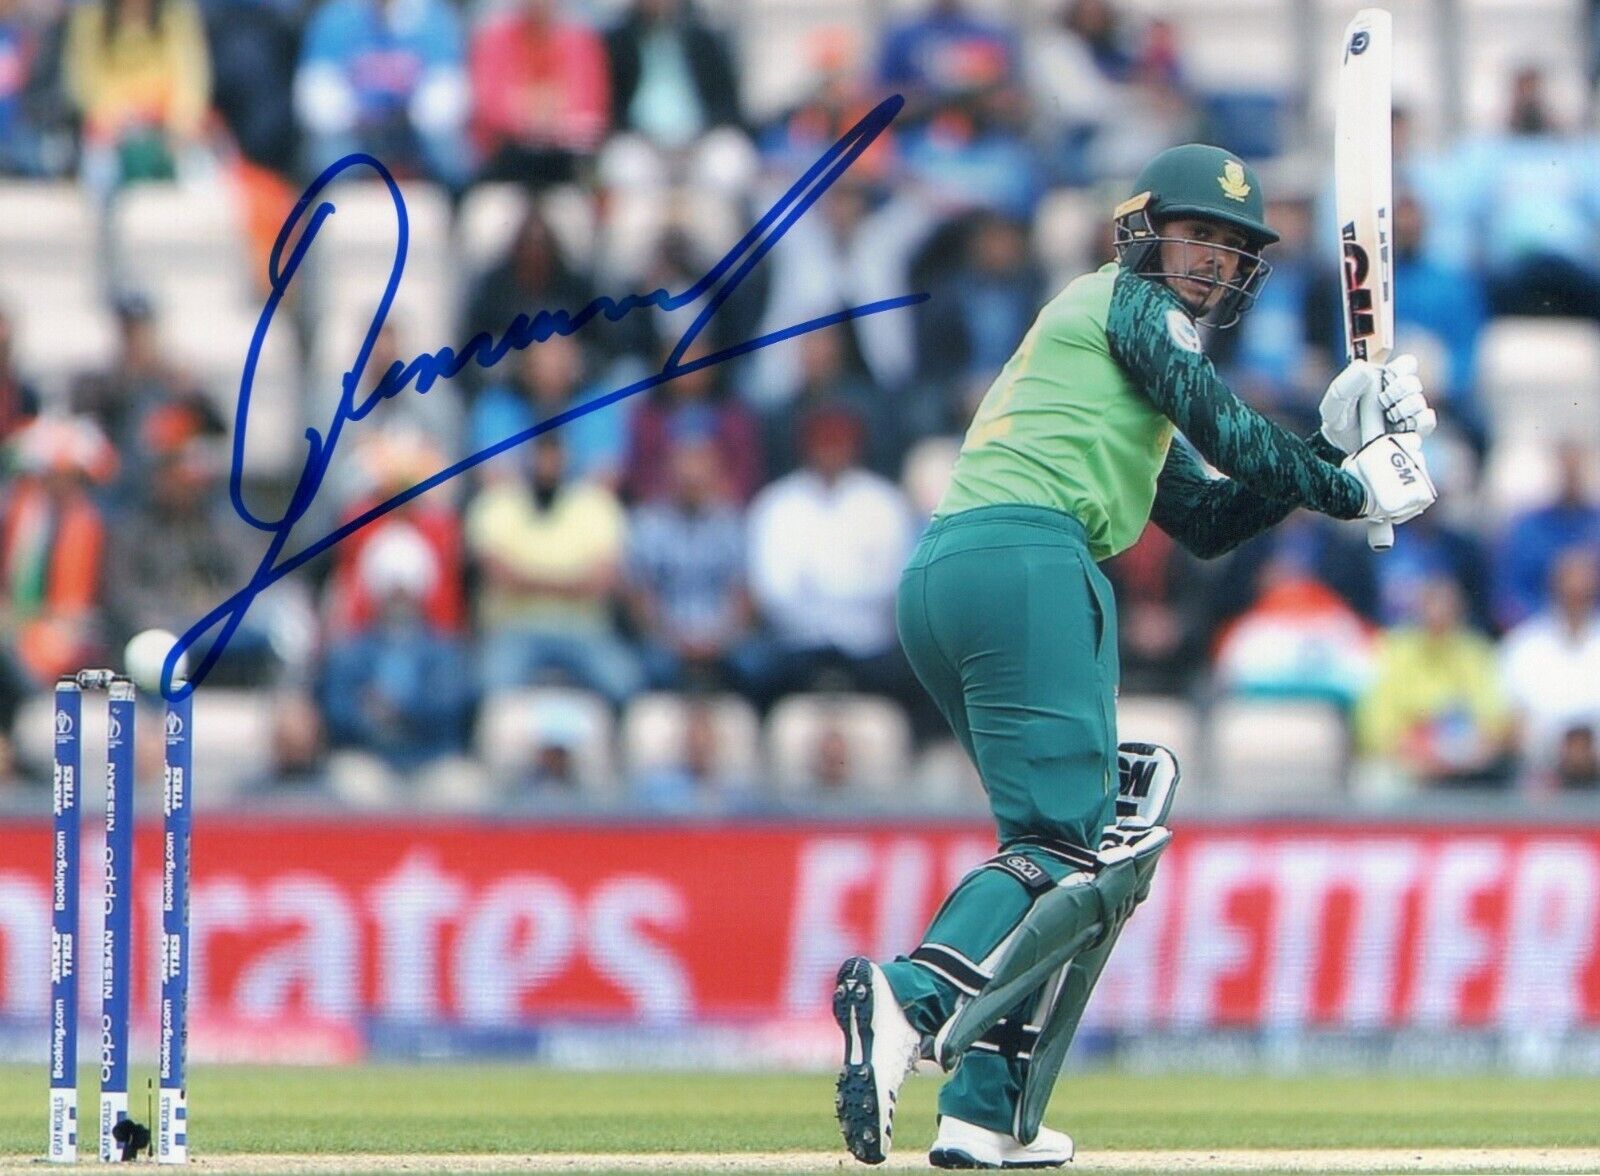 5x7 Original Autographed Photo of South African Cricketer Quinton de Kock